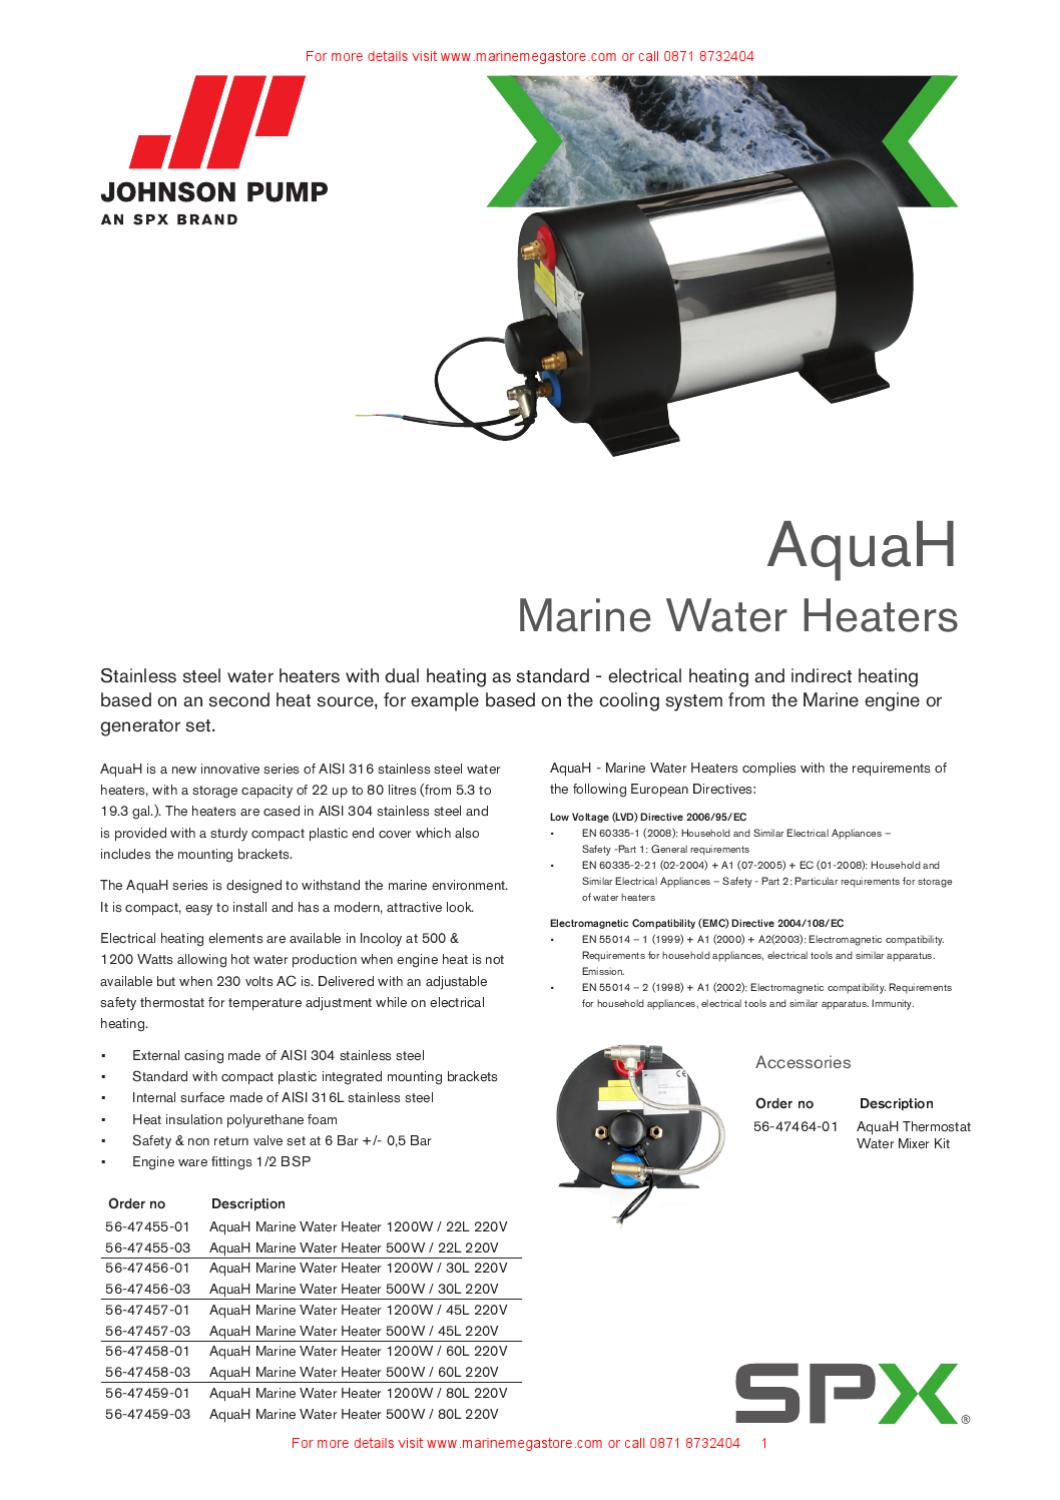 Spx Johnson Pump Marine Ab Marine Water Heater By Marine Mega